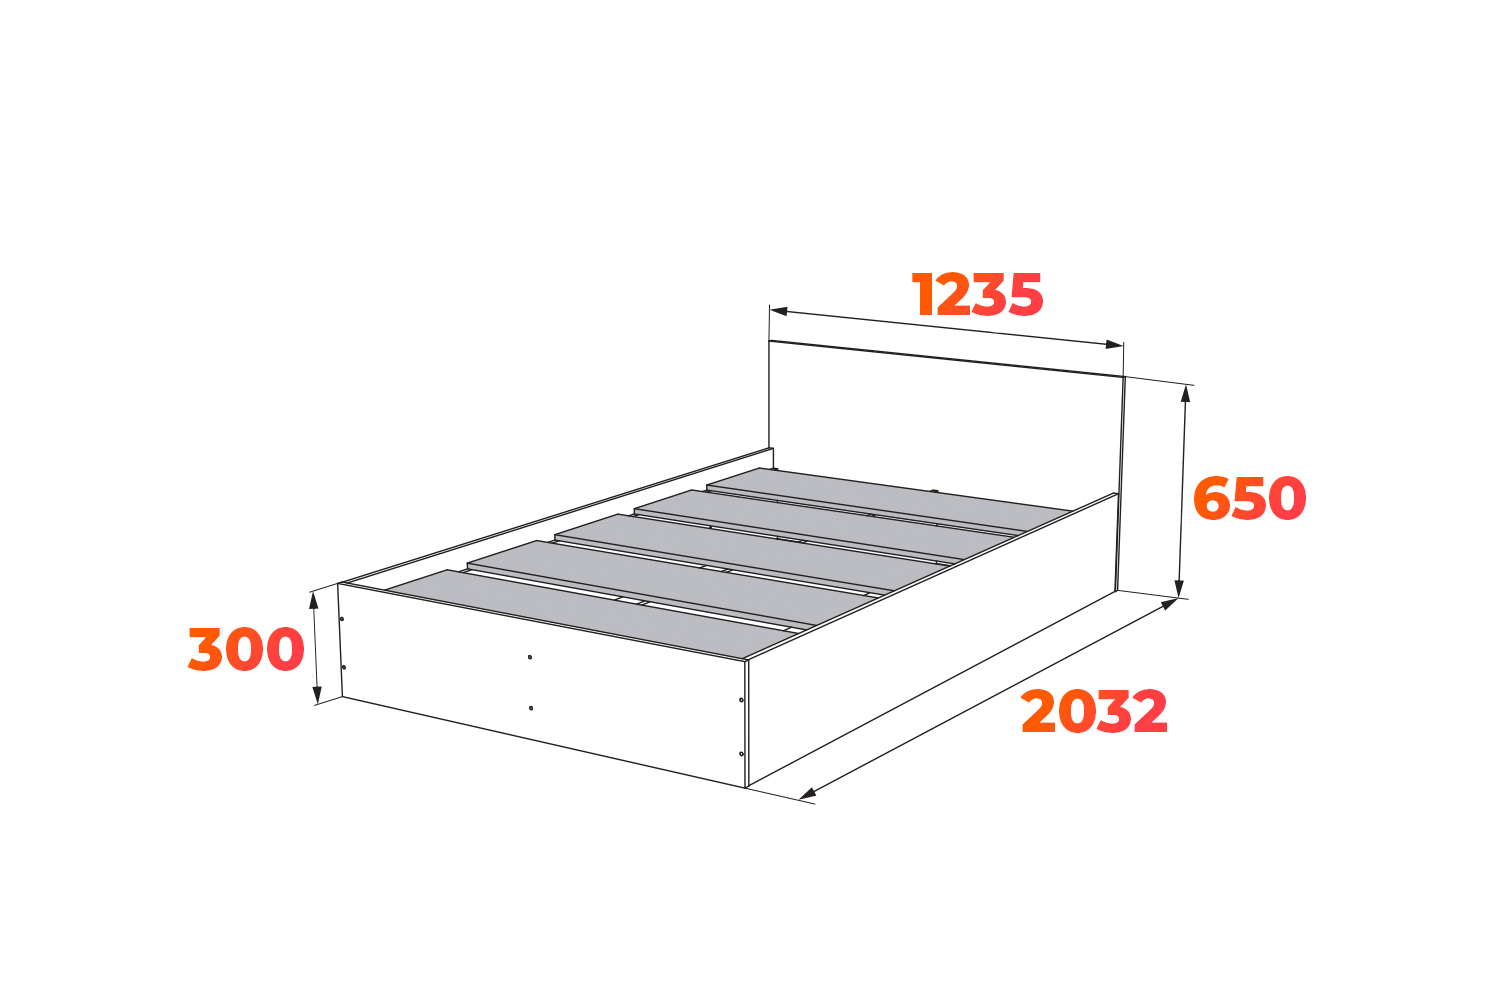 Схема кровати КРМ 1200.1 с размерами